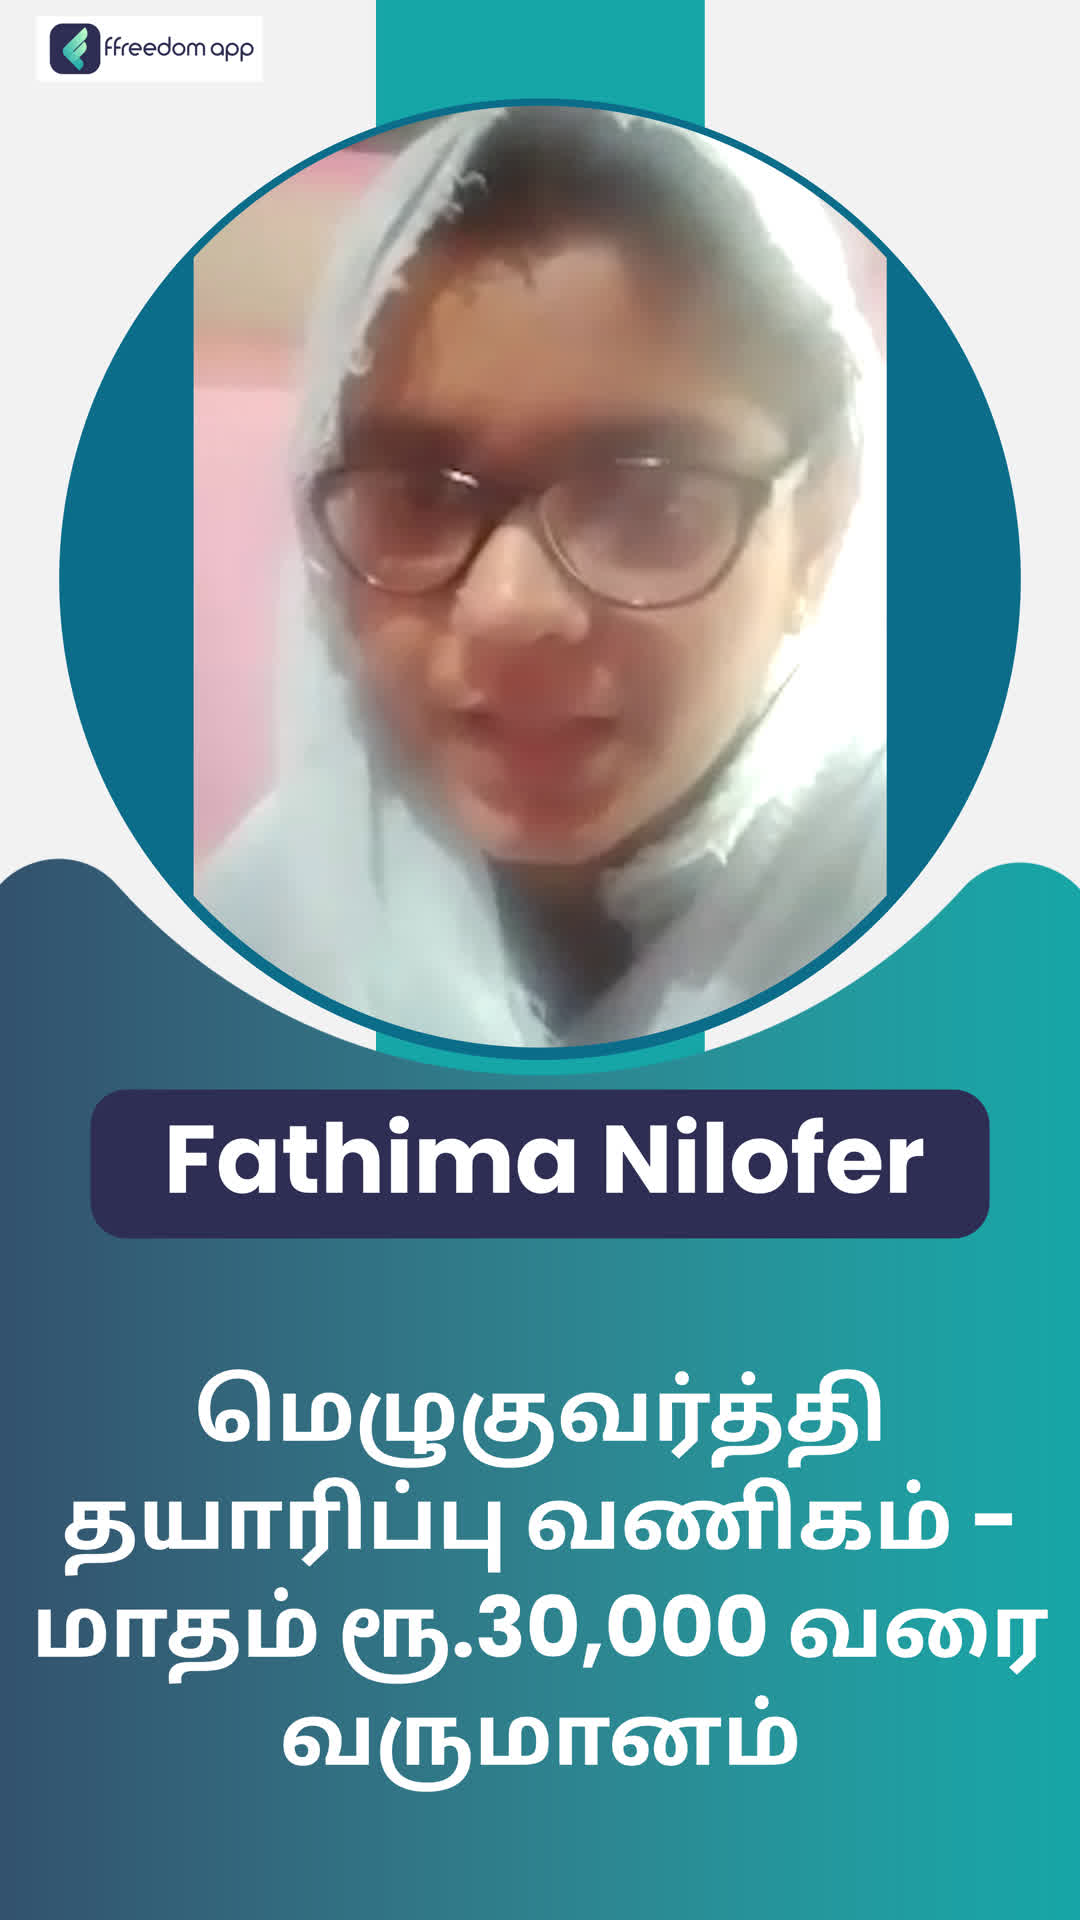 fathima nilofer.B's Honest Review of ffreedom app - Thanjavur ,Tamil Nadu